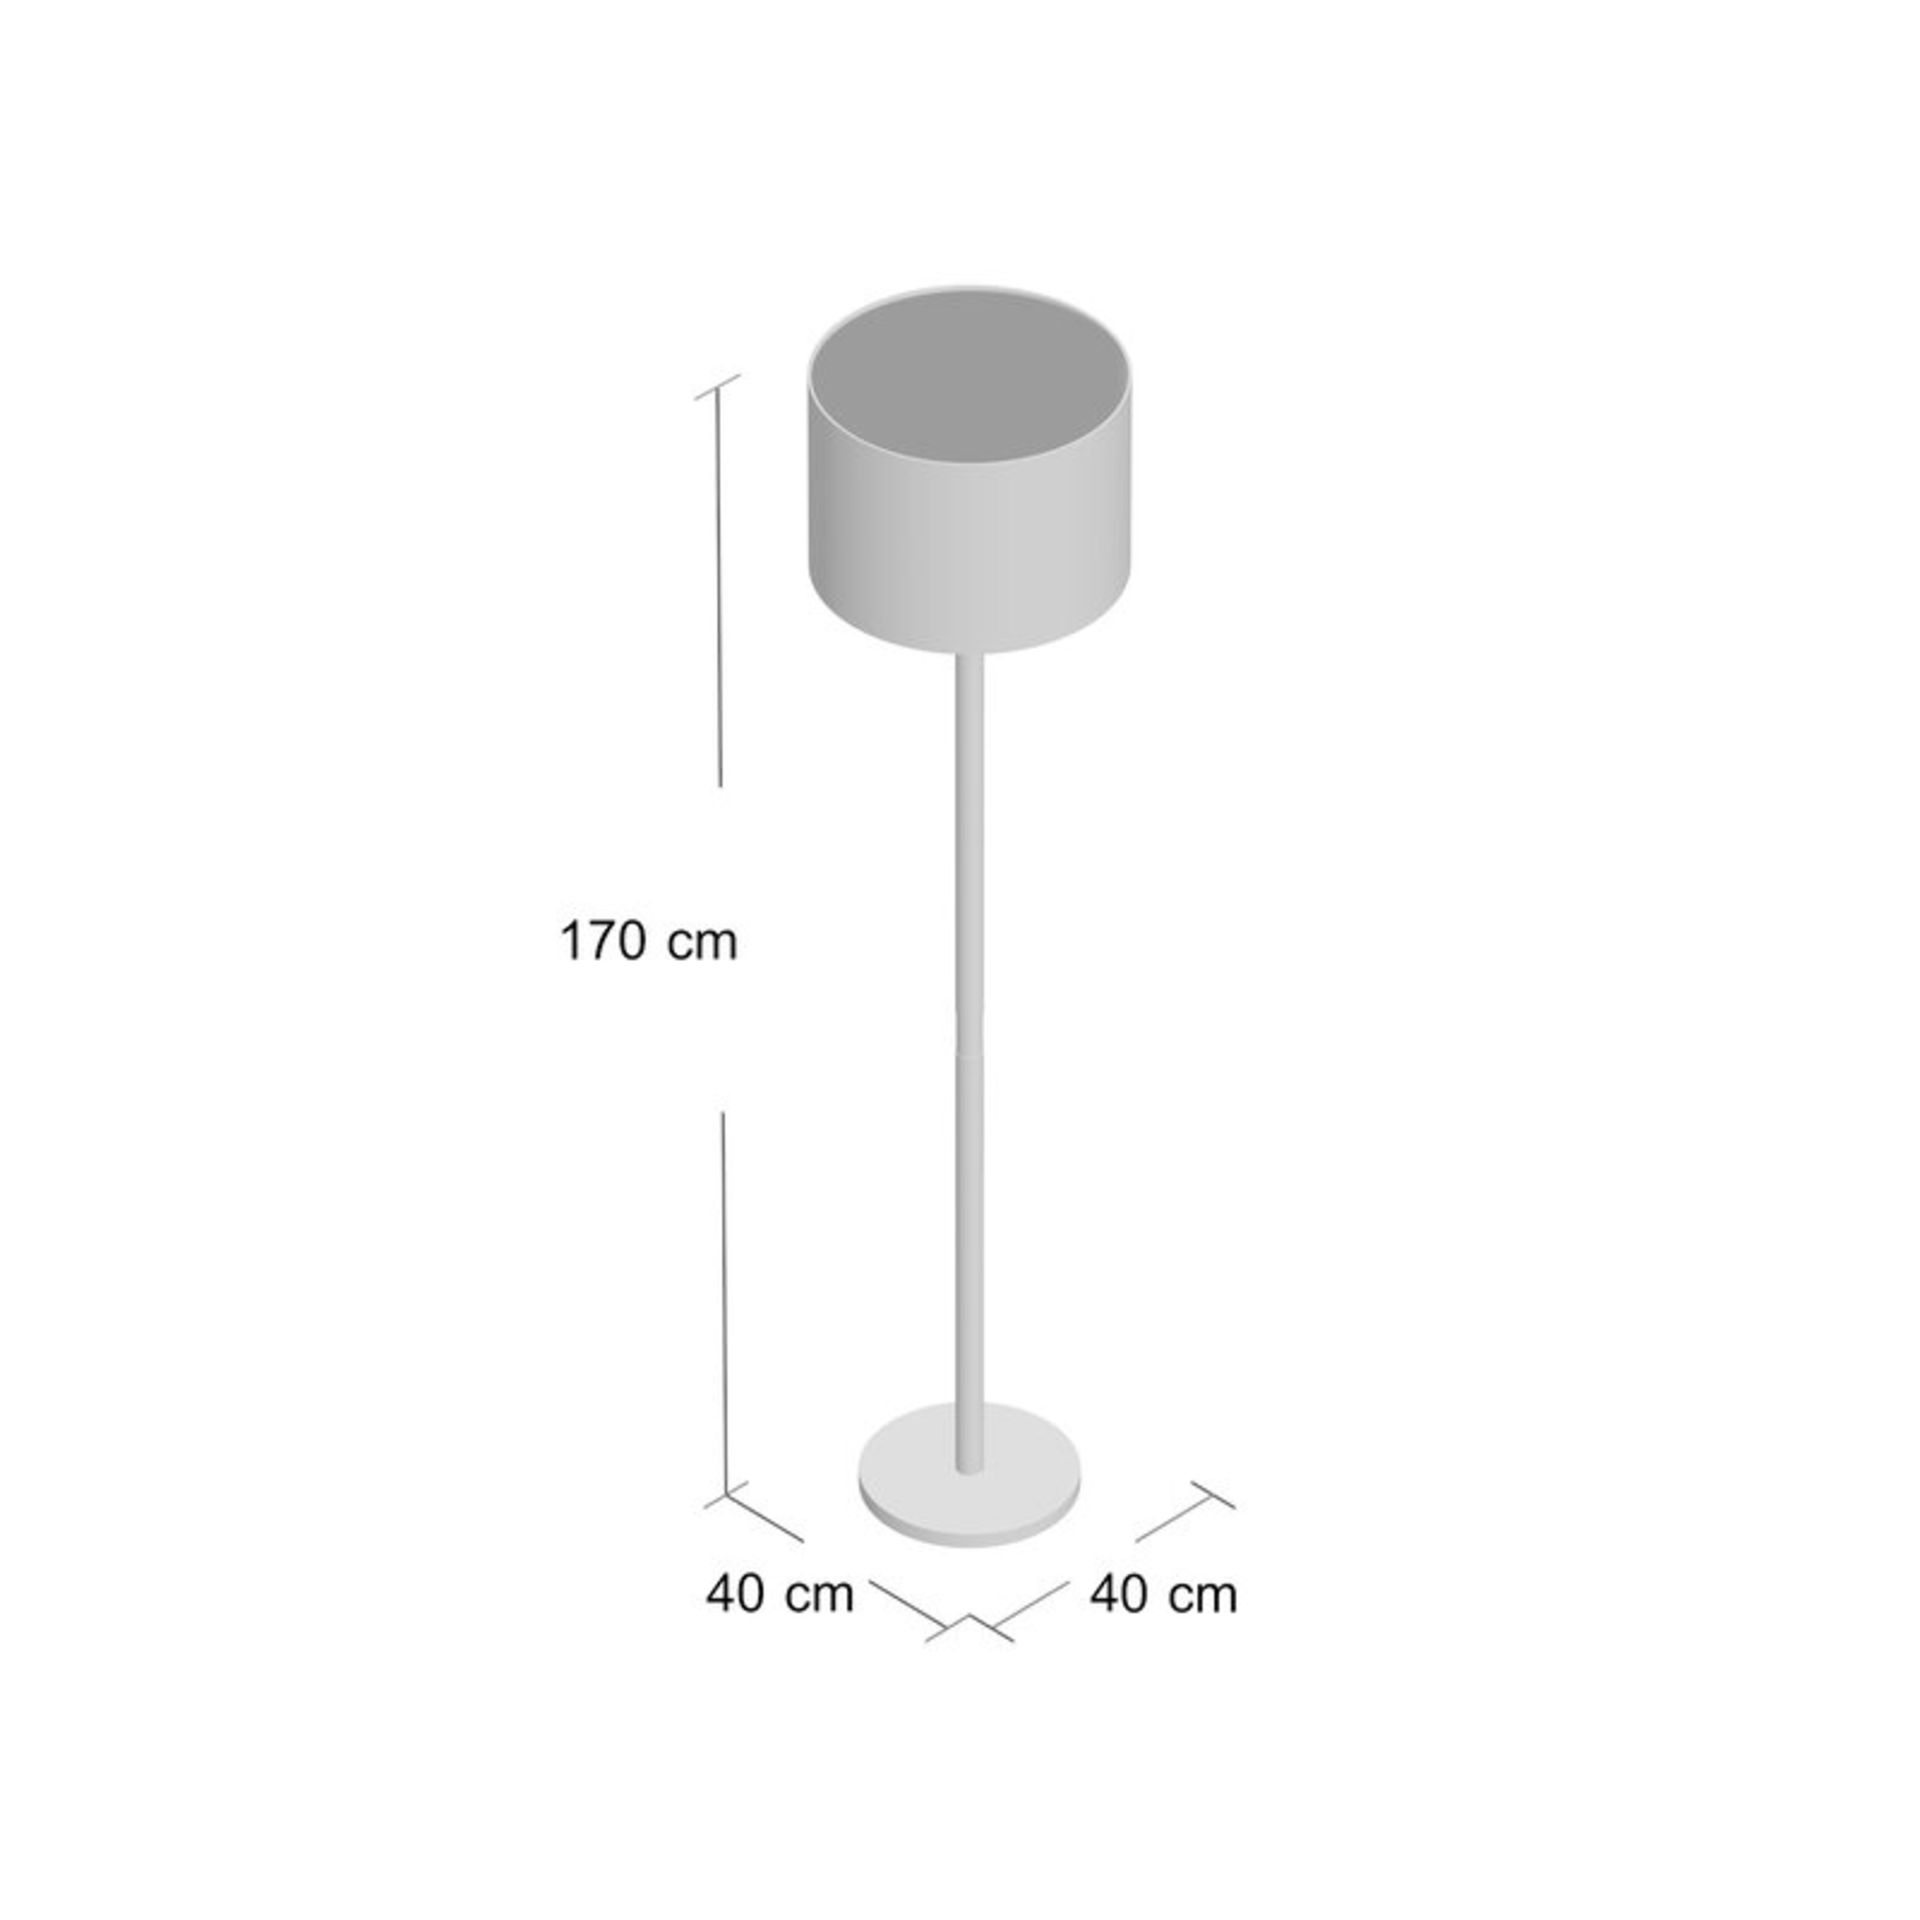 Sally 170cm Floor Lamp - RRP £107.99 - Image 2 of 2